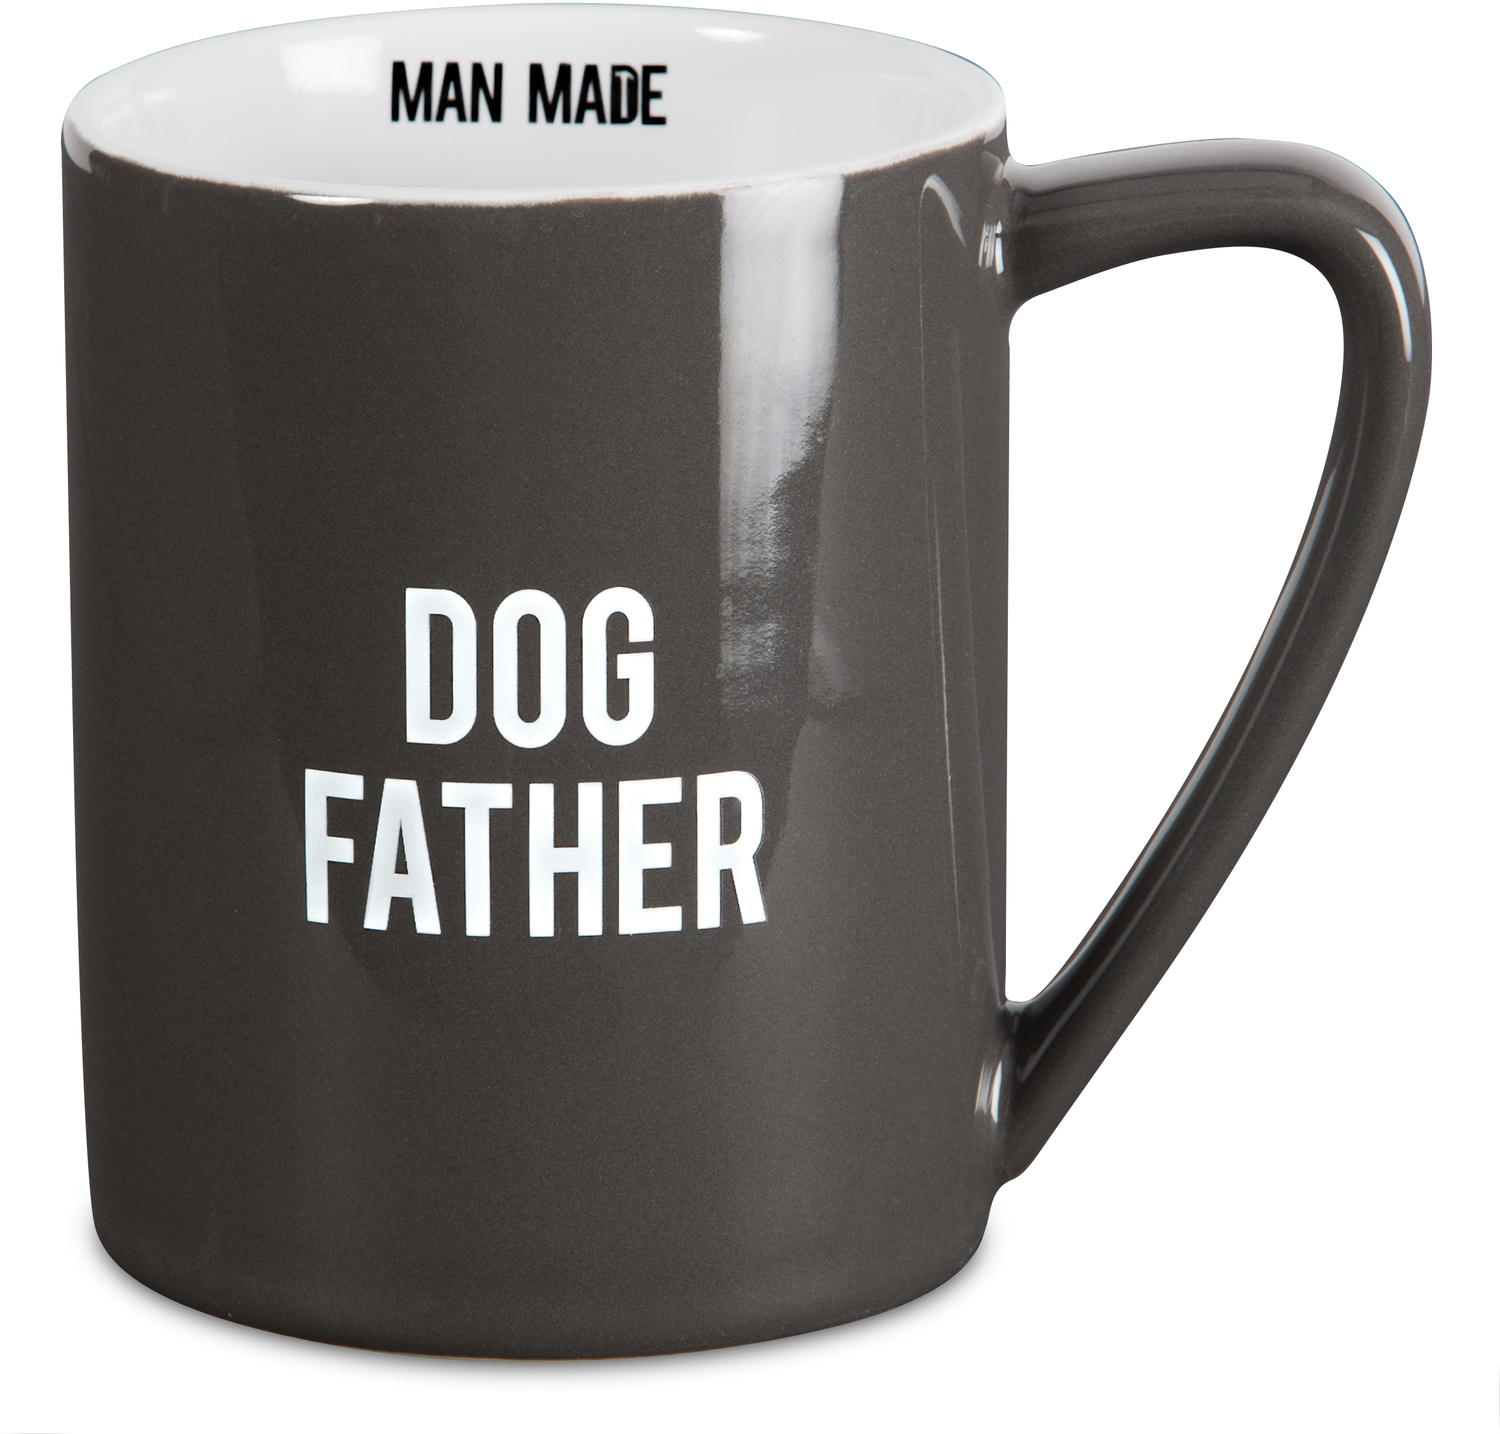 Dog Father by Man Made - Dog Father - 18 oz Mug